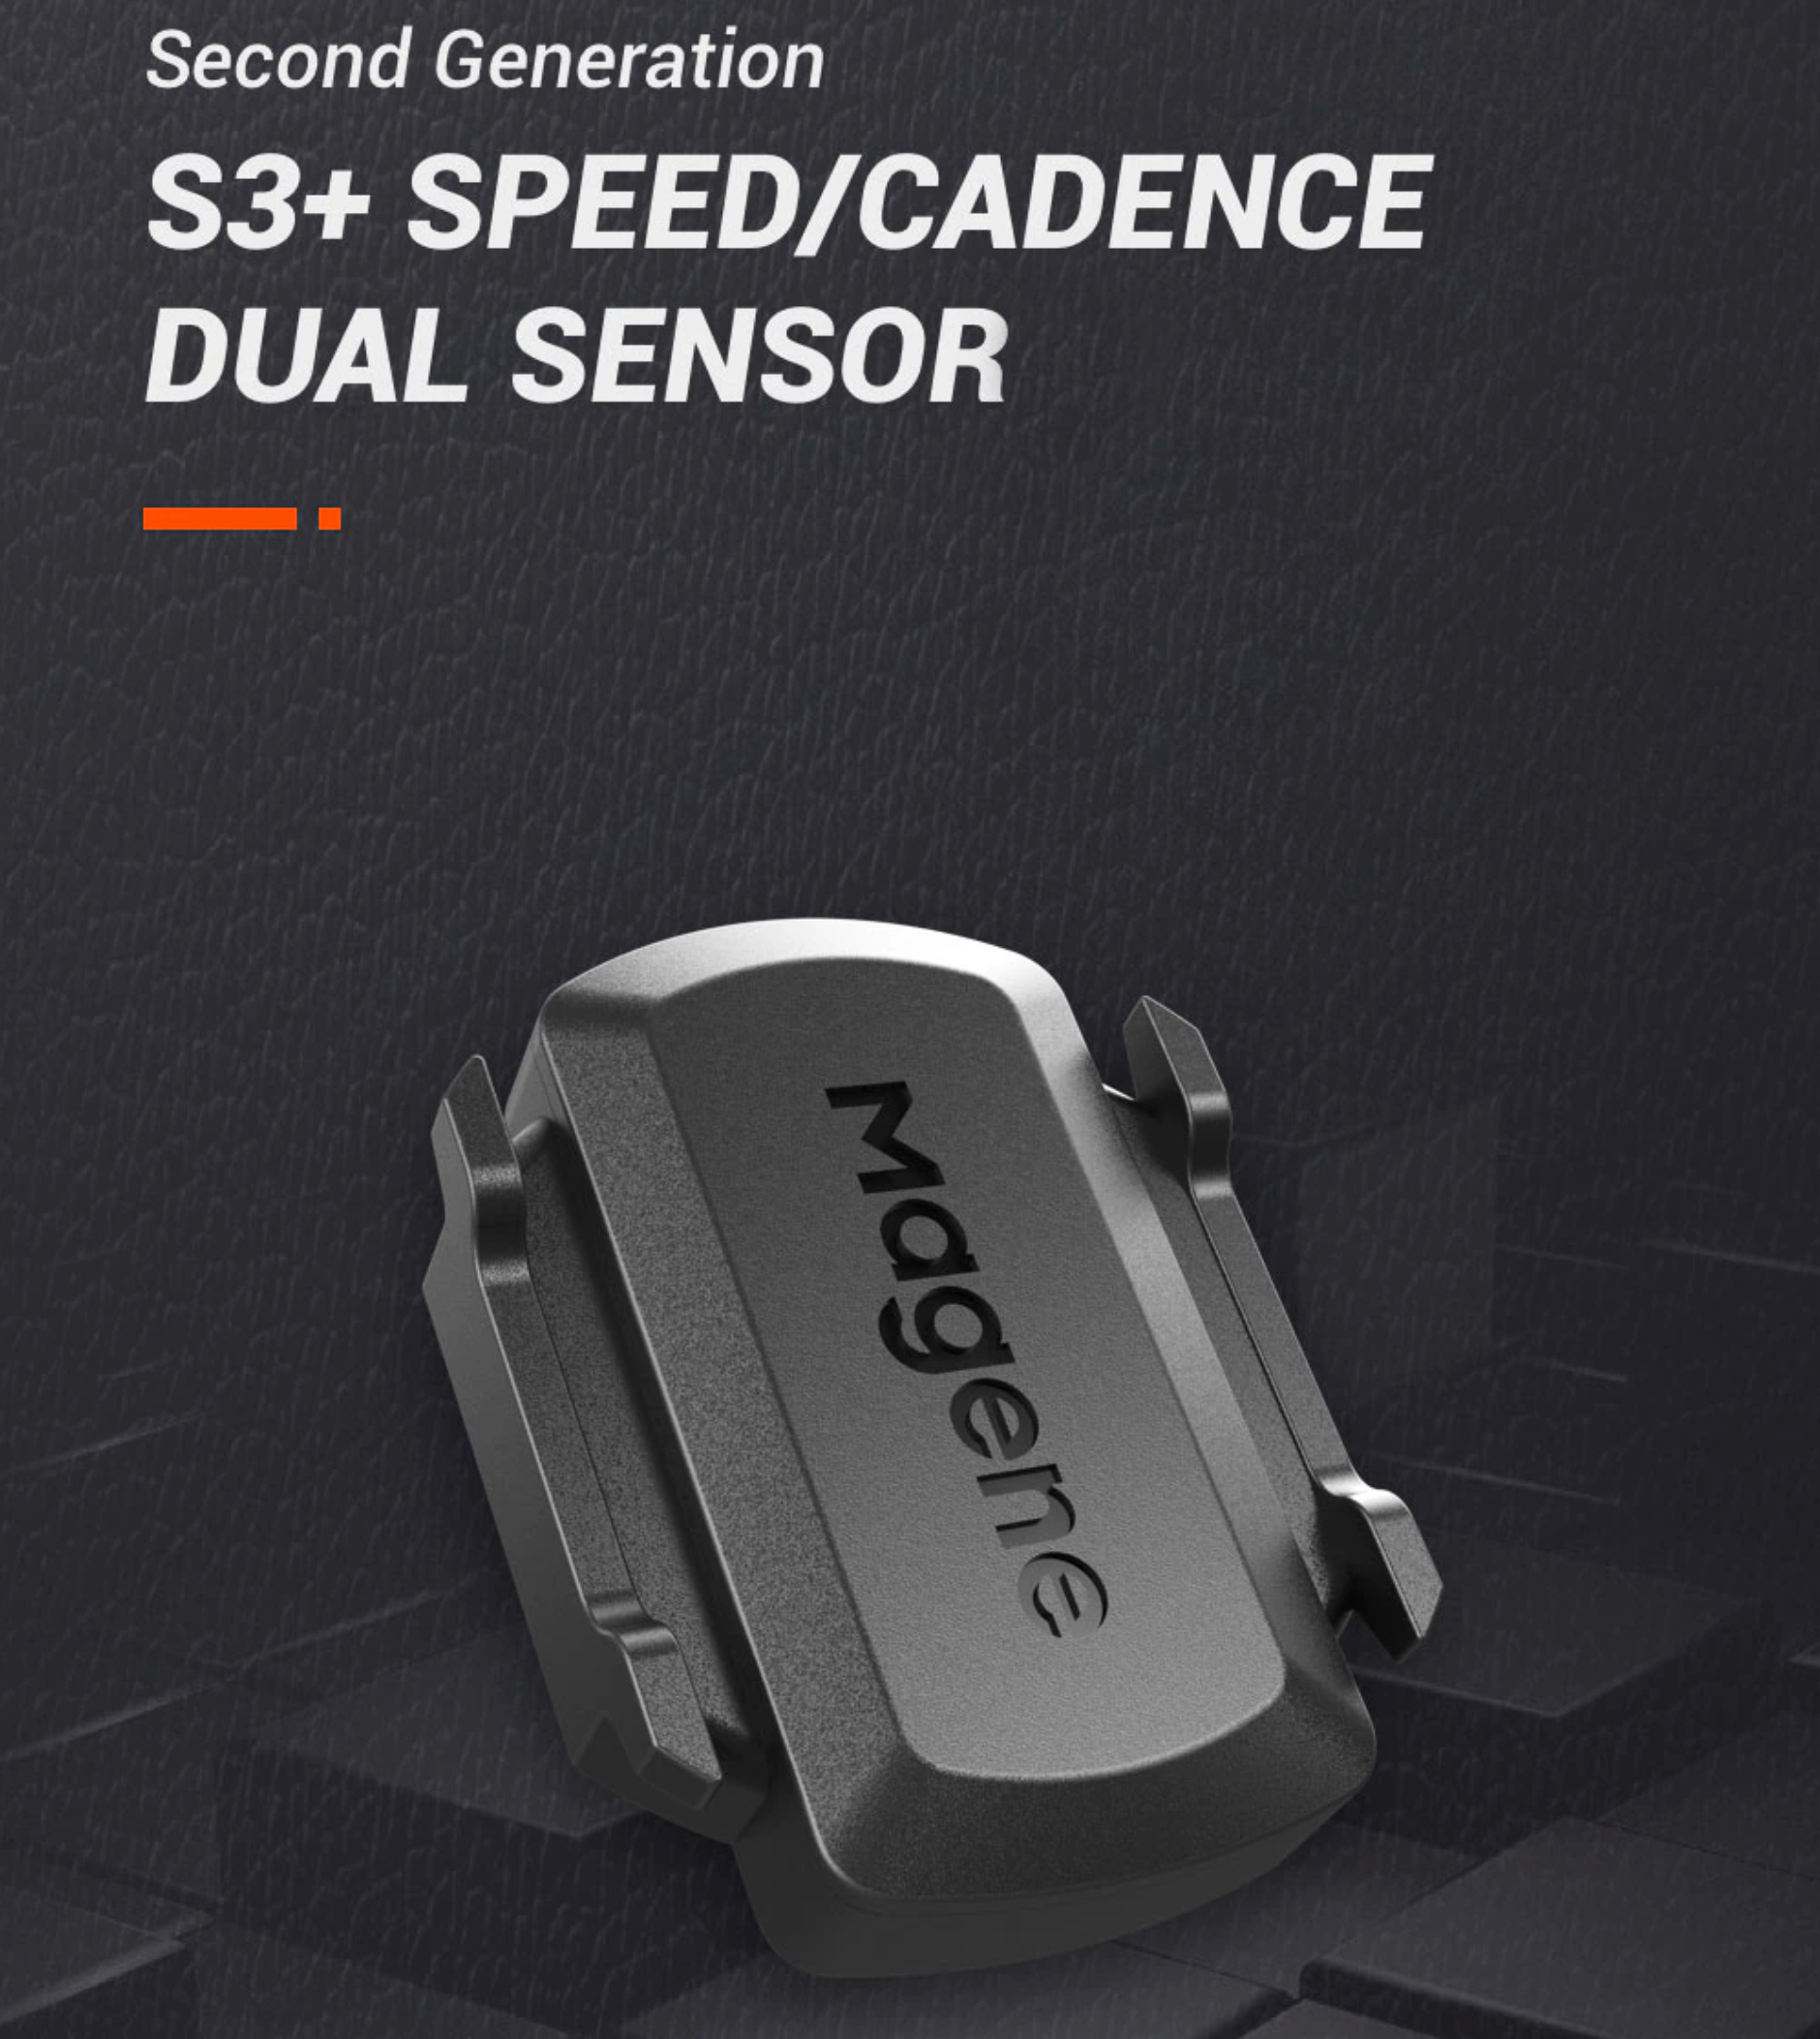 MAGENE ANT+Bluetooth Bike Speed Cadence Dual Sensor for Garmin iGPSPORT Bryton 